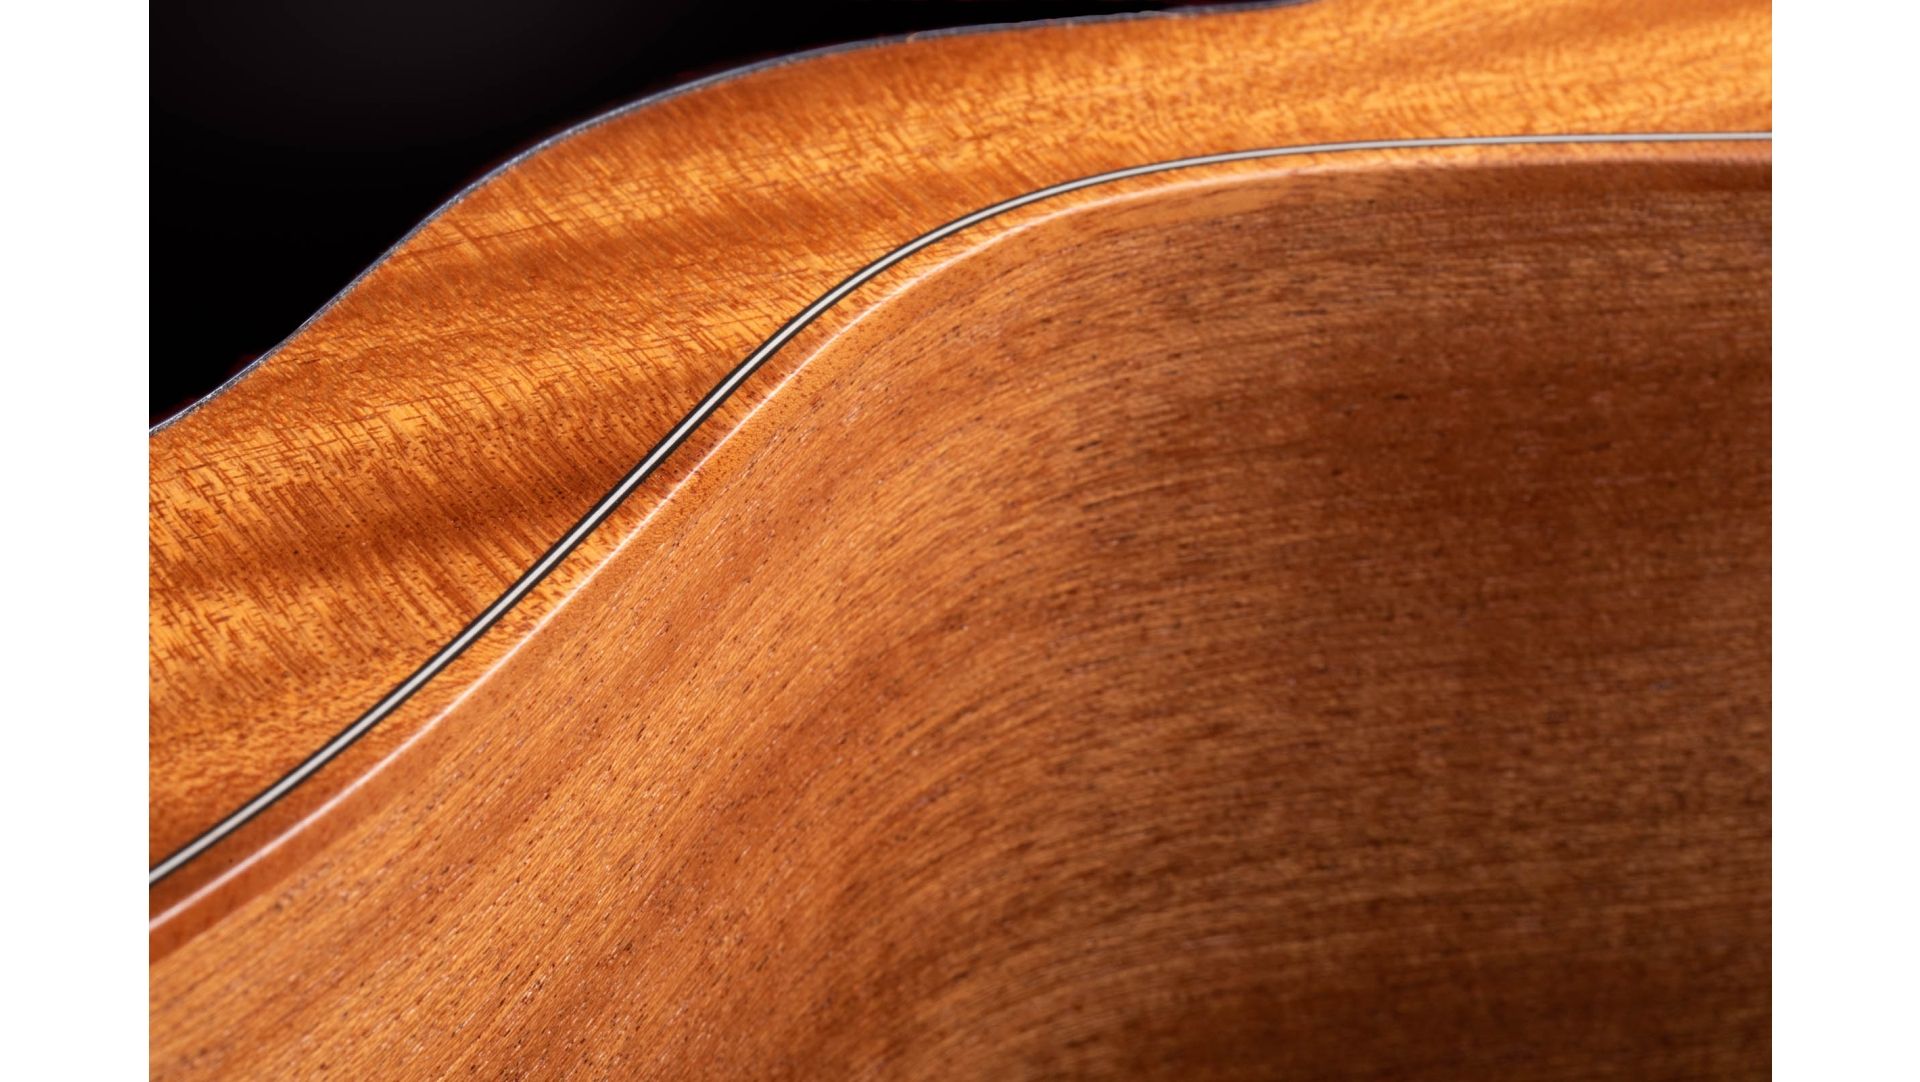 GS Mini Mahogany Layered Sapele Acoustic Guitar | Taylor Guitars